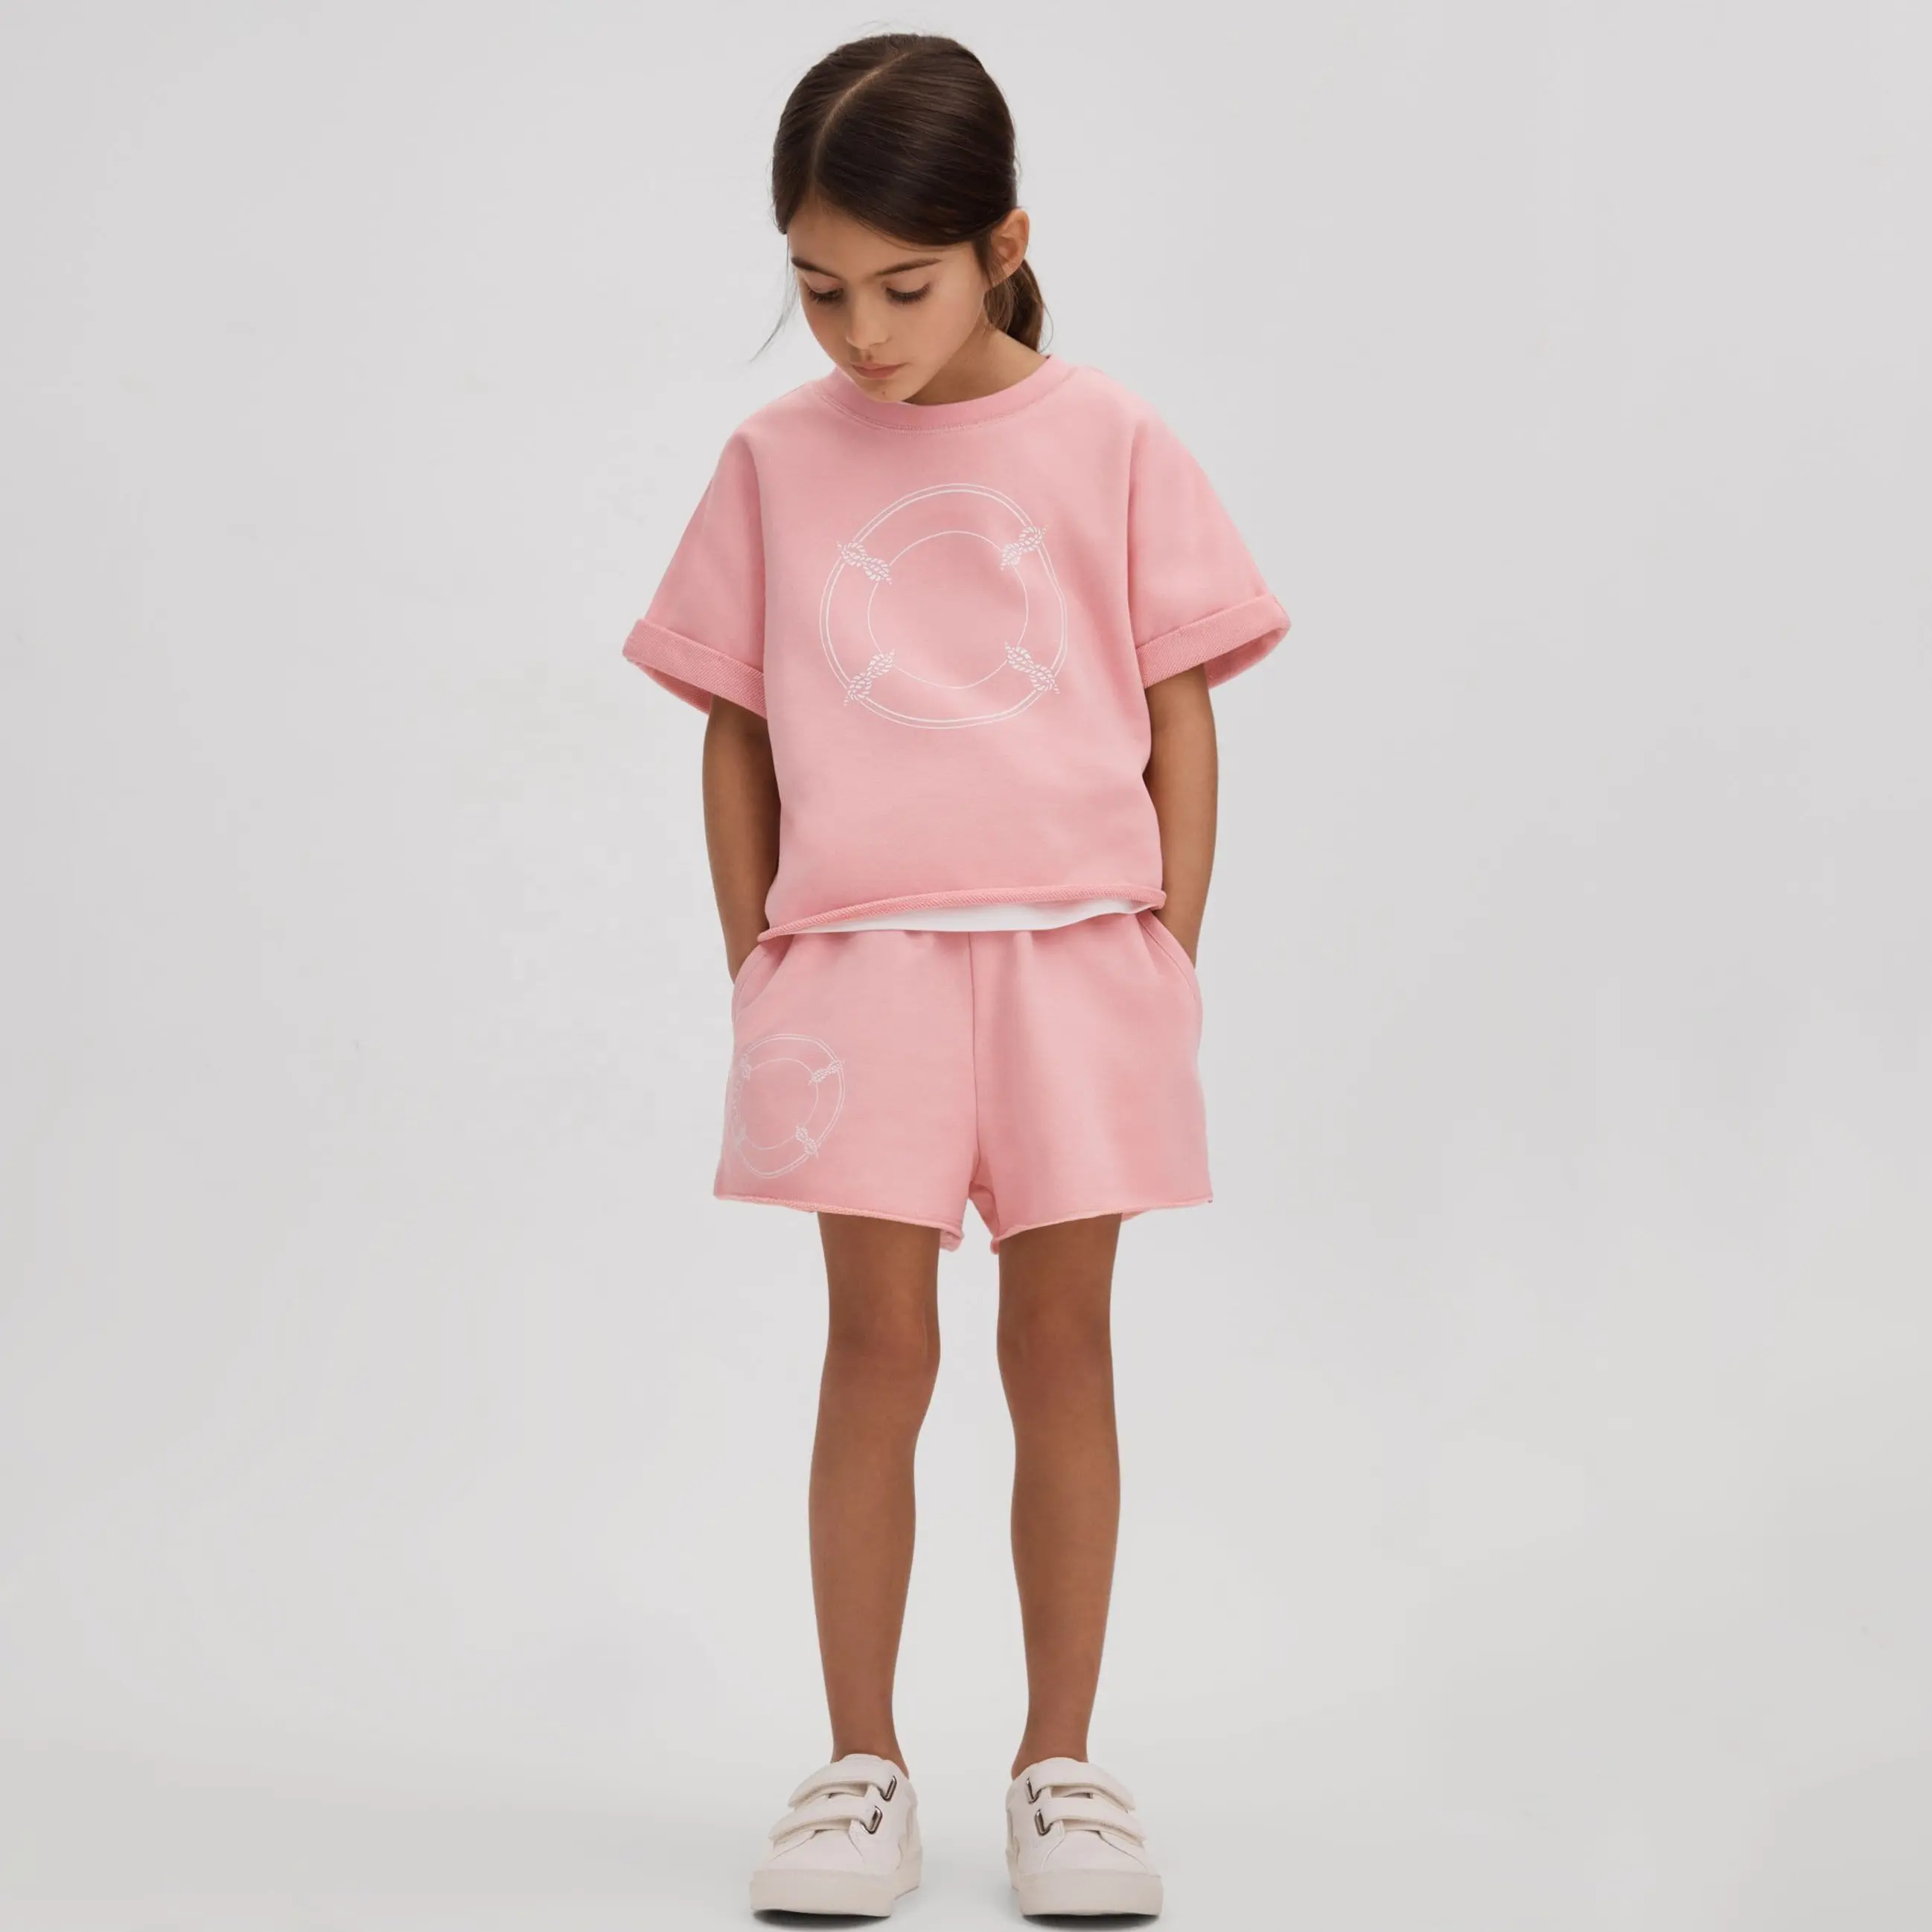 Venta al por mayor de ropa llana para niños Terry Cotton Girl T Shirt Shorts Outfits Kids Summer Clothing Set